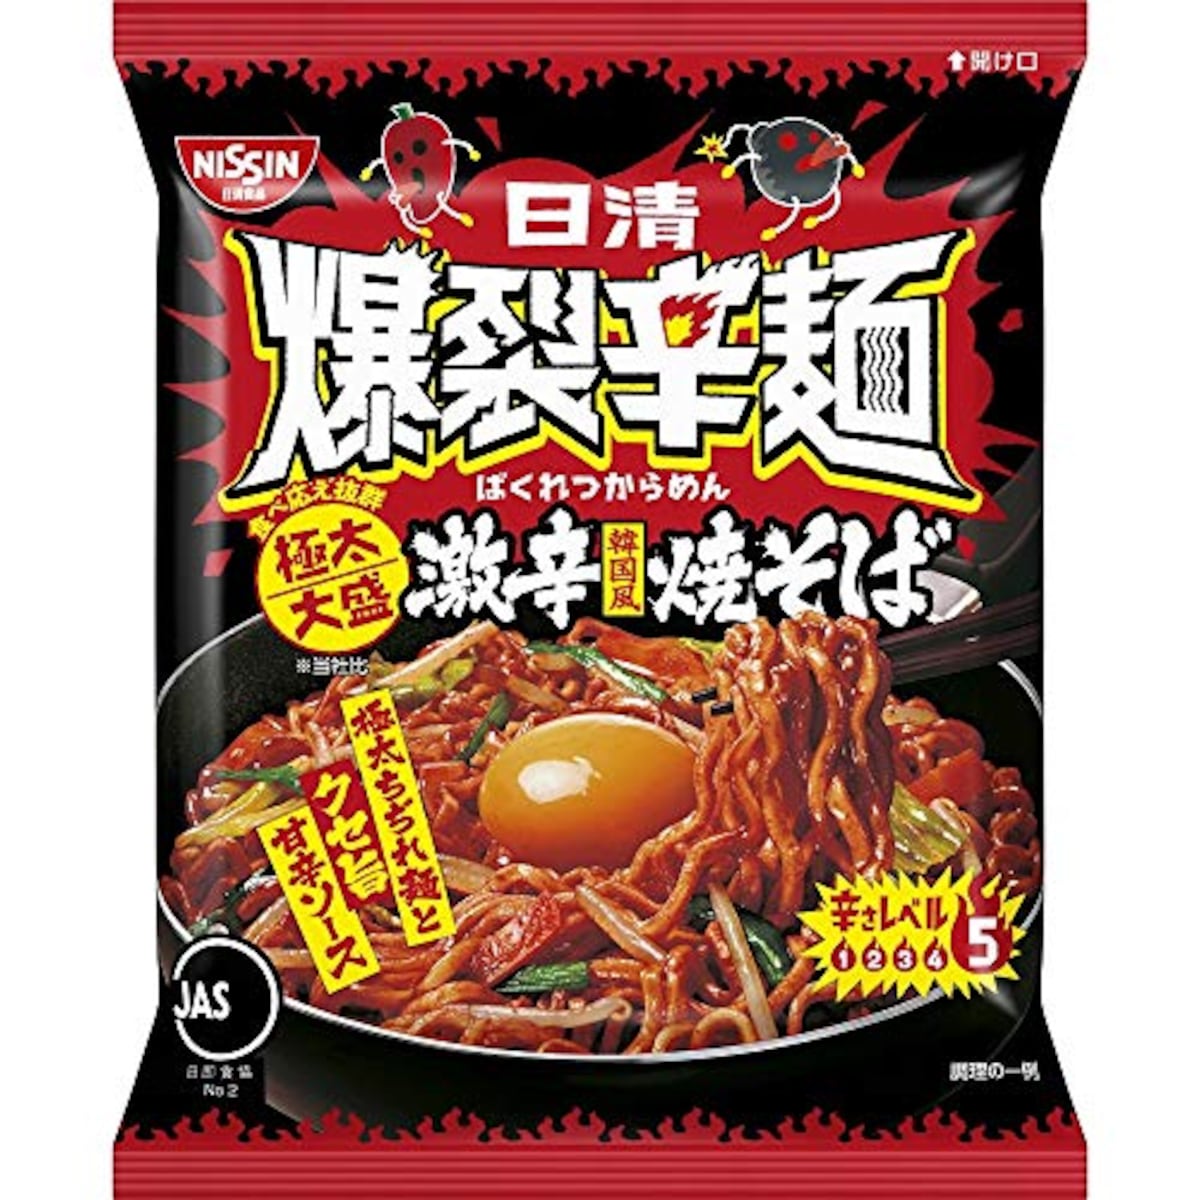 爆裂辛麺 韓国風 極太大盛激辛焼そば 130g×12袋